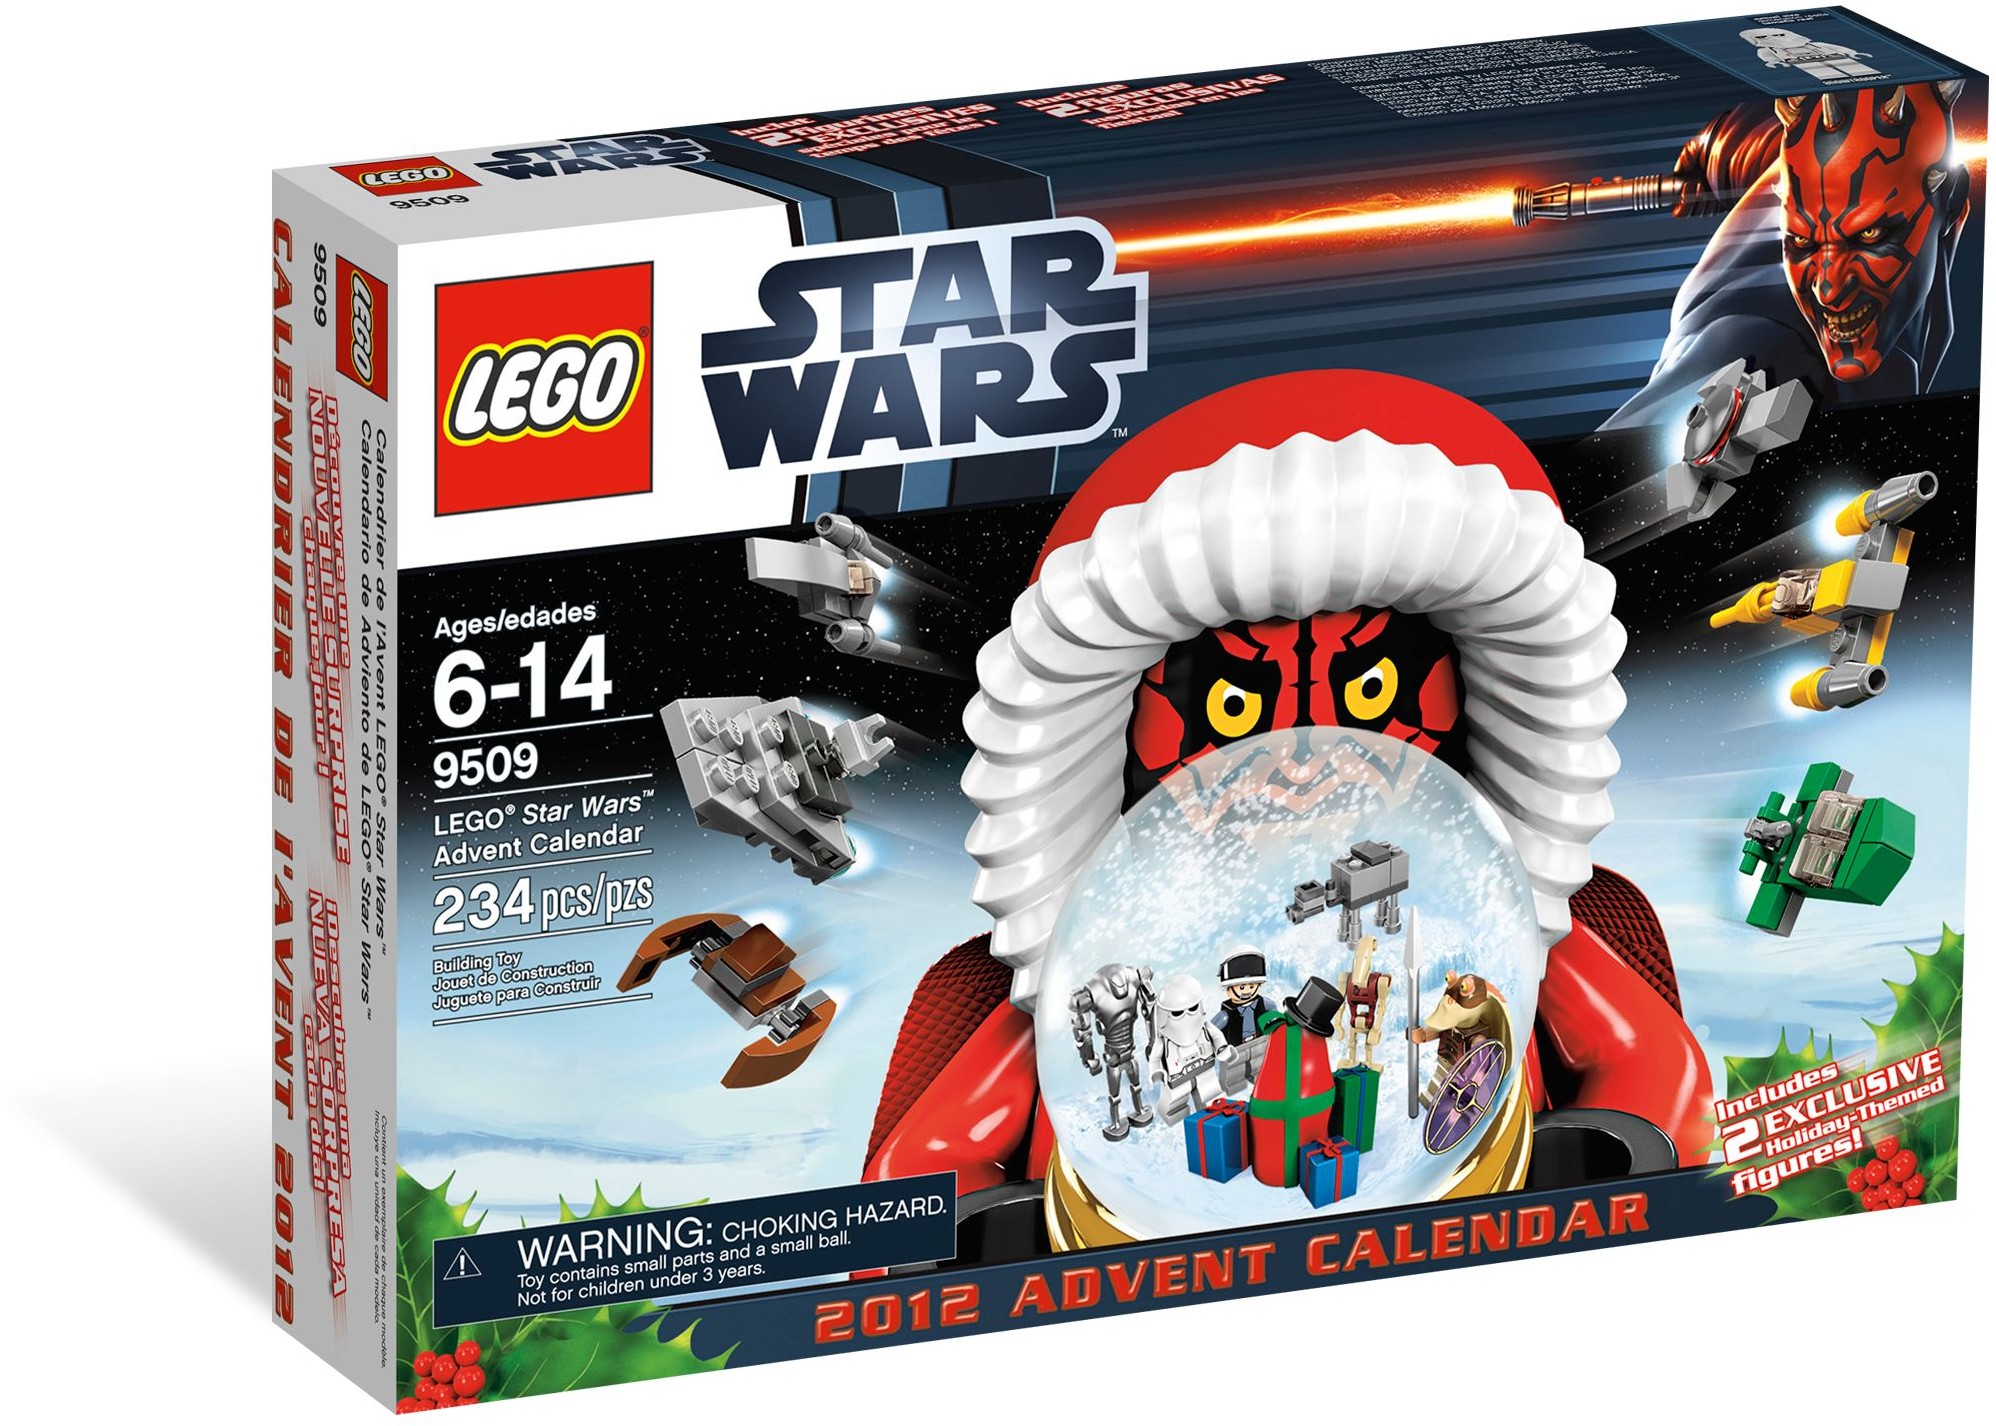 9509: Star Wars Advent Calendar 2012 Lego Star Wars Beyond